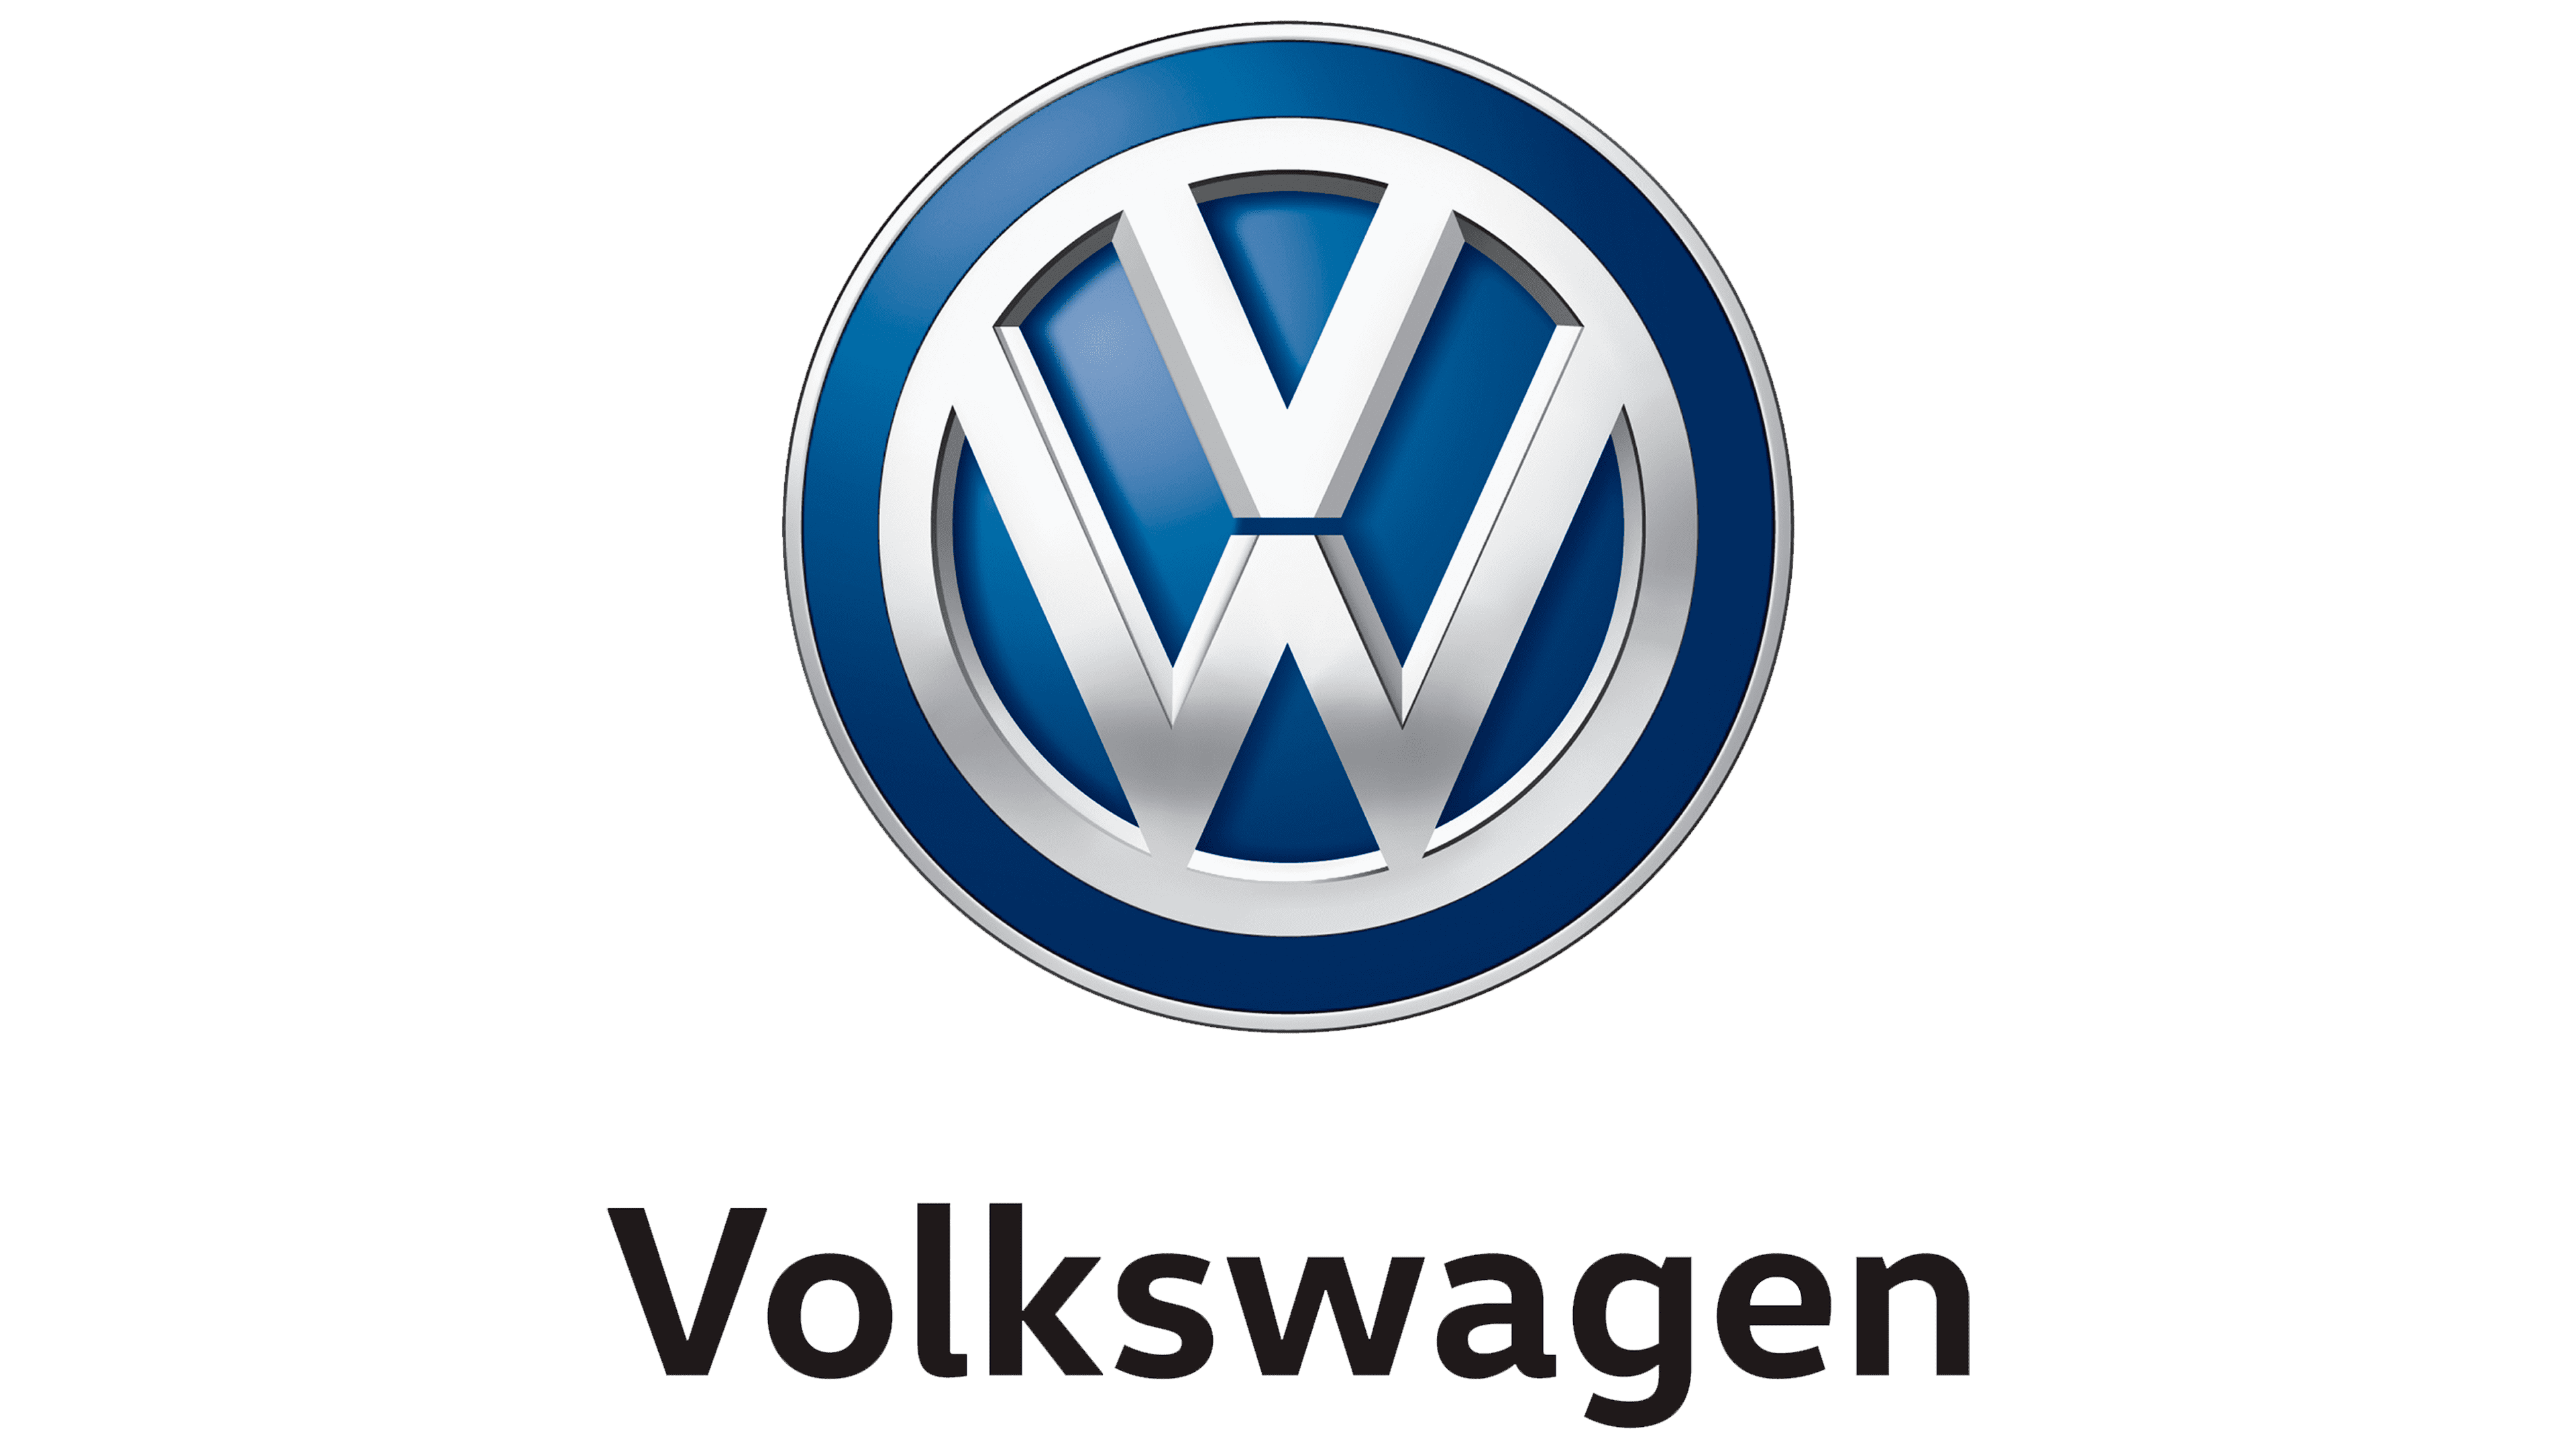 https://logos-world.net/wp-content/uploads/2021/04/Volkswagen-Emblem.png